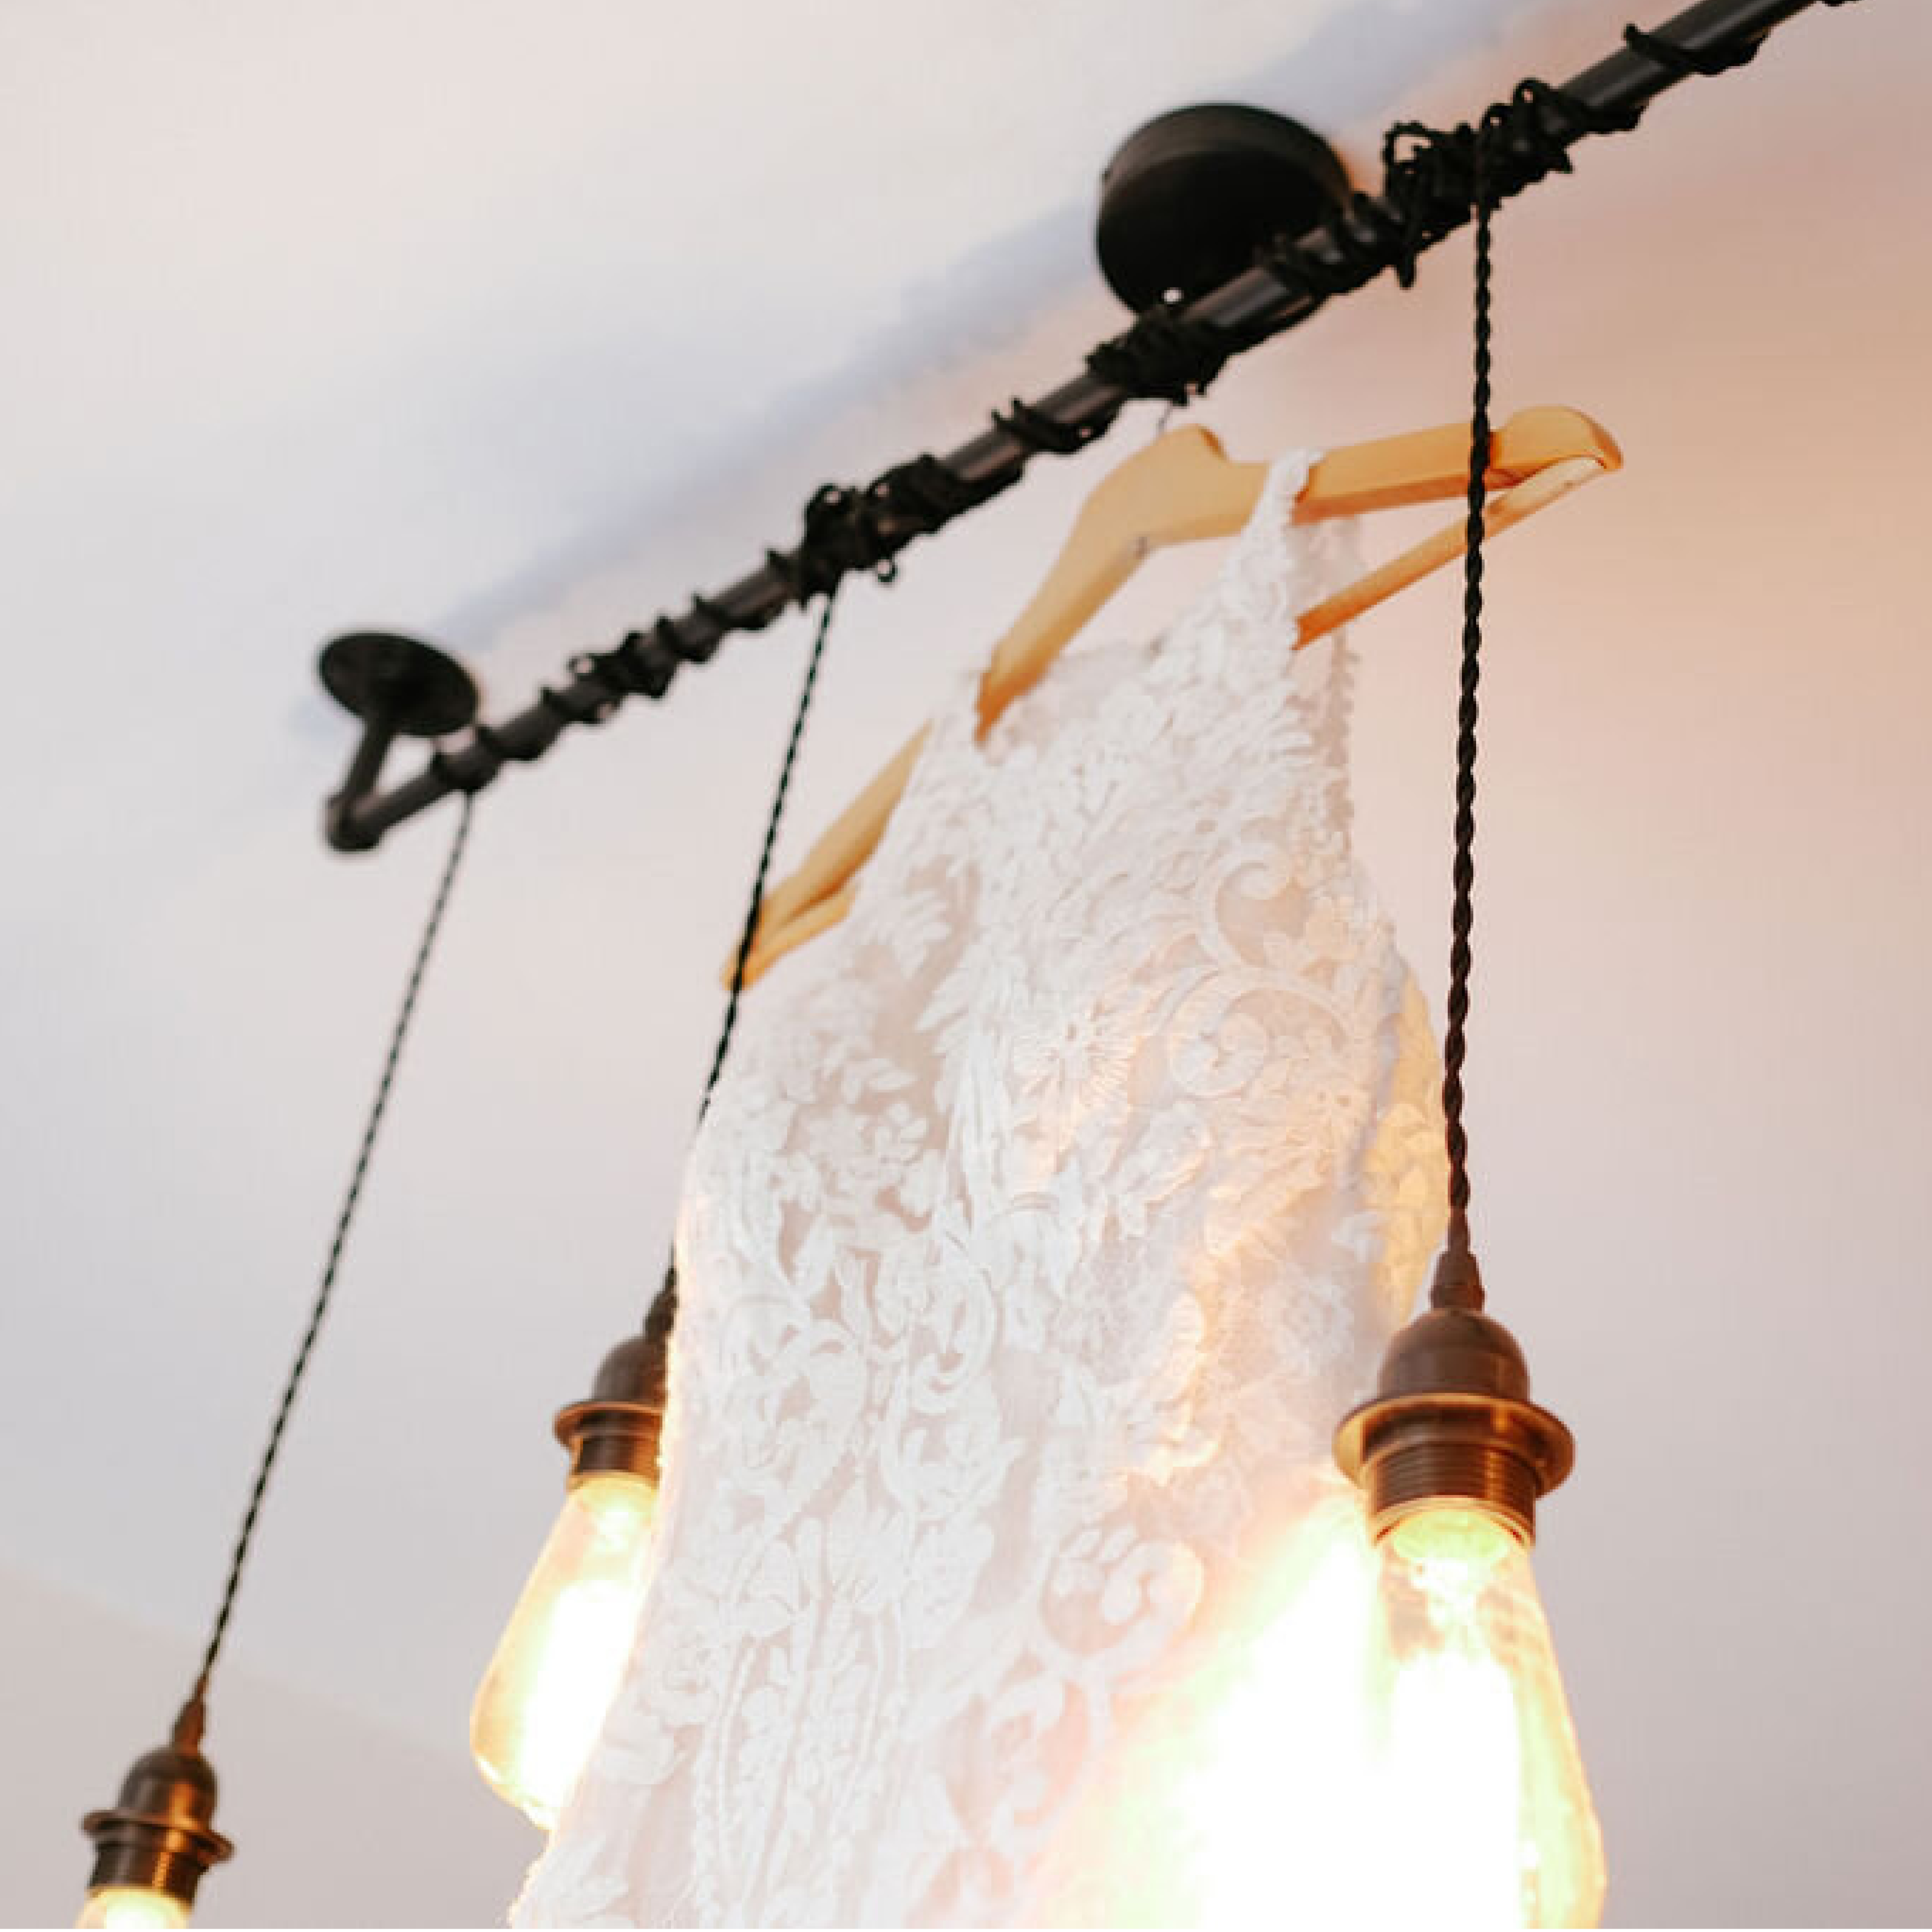 Wedding dress with wedding decoration lights